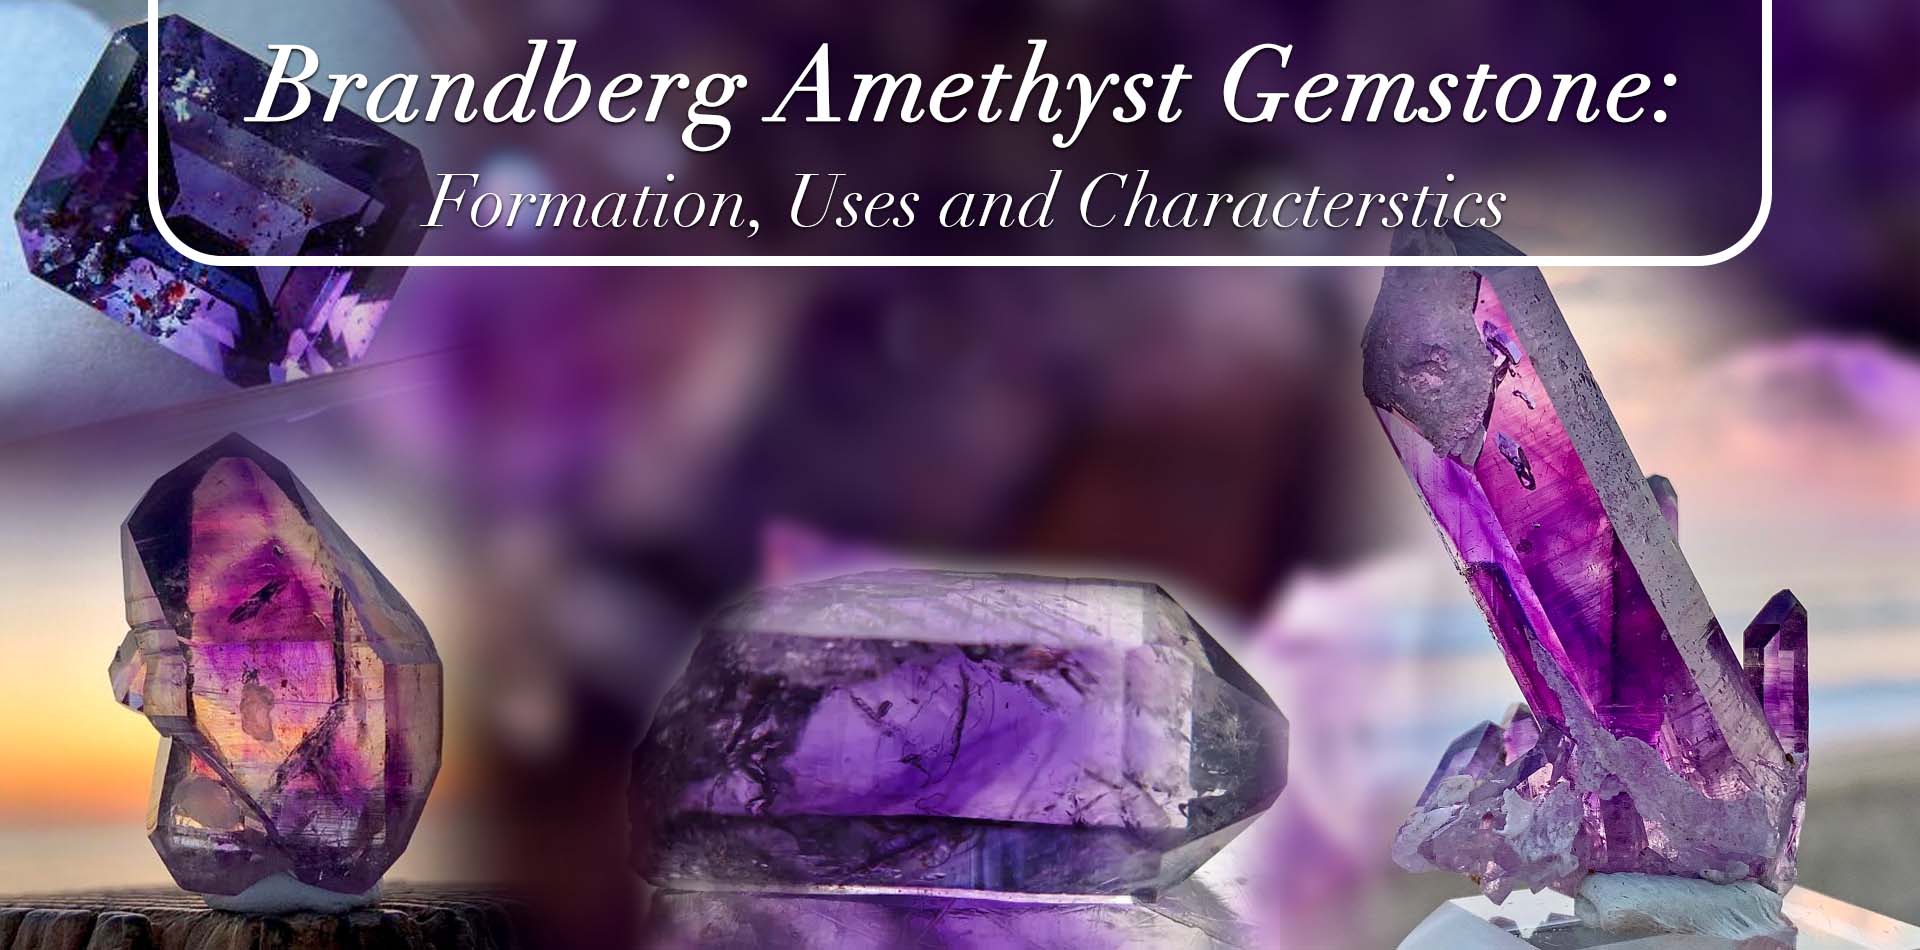 Brandberg Amethyst Gemstone: Formation, Uses, and Characteristics